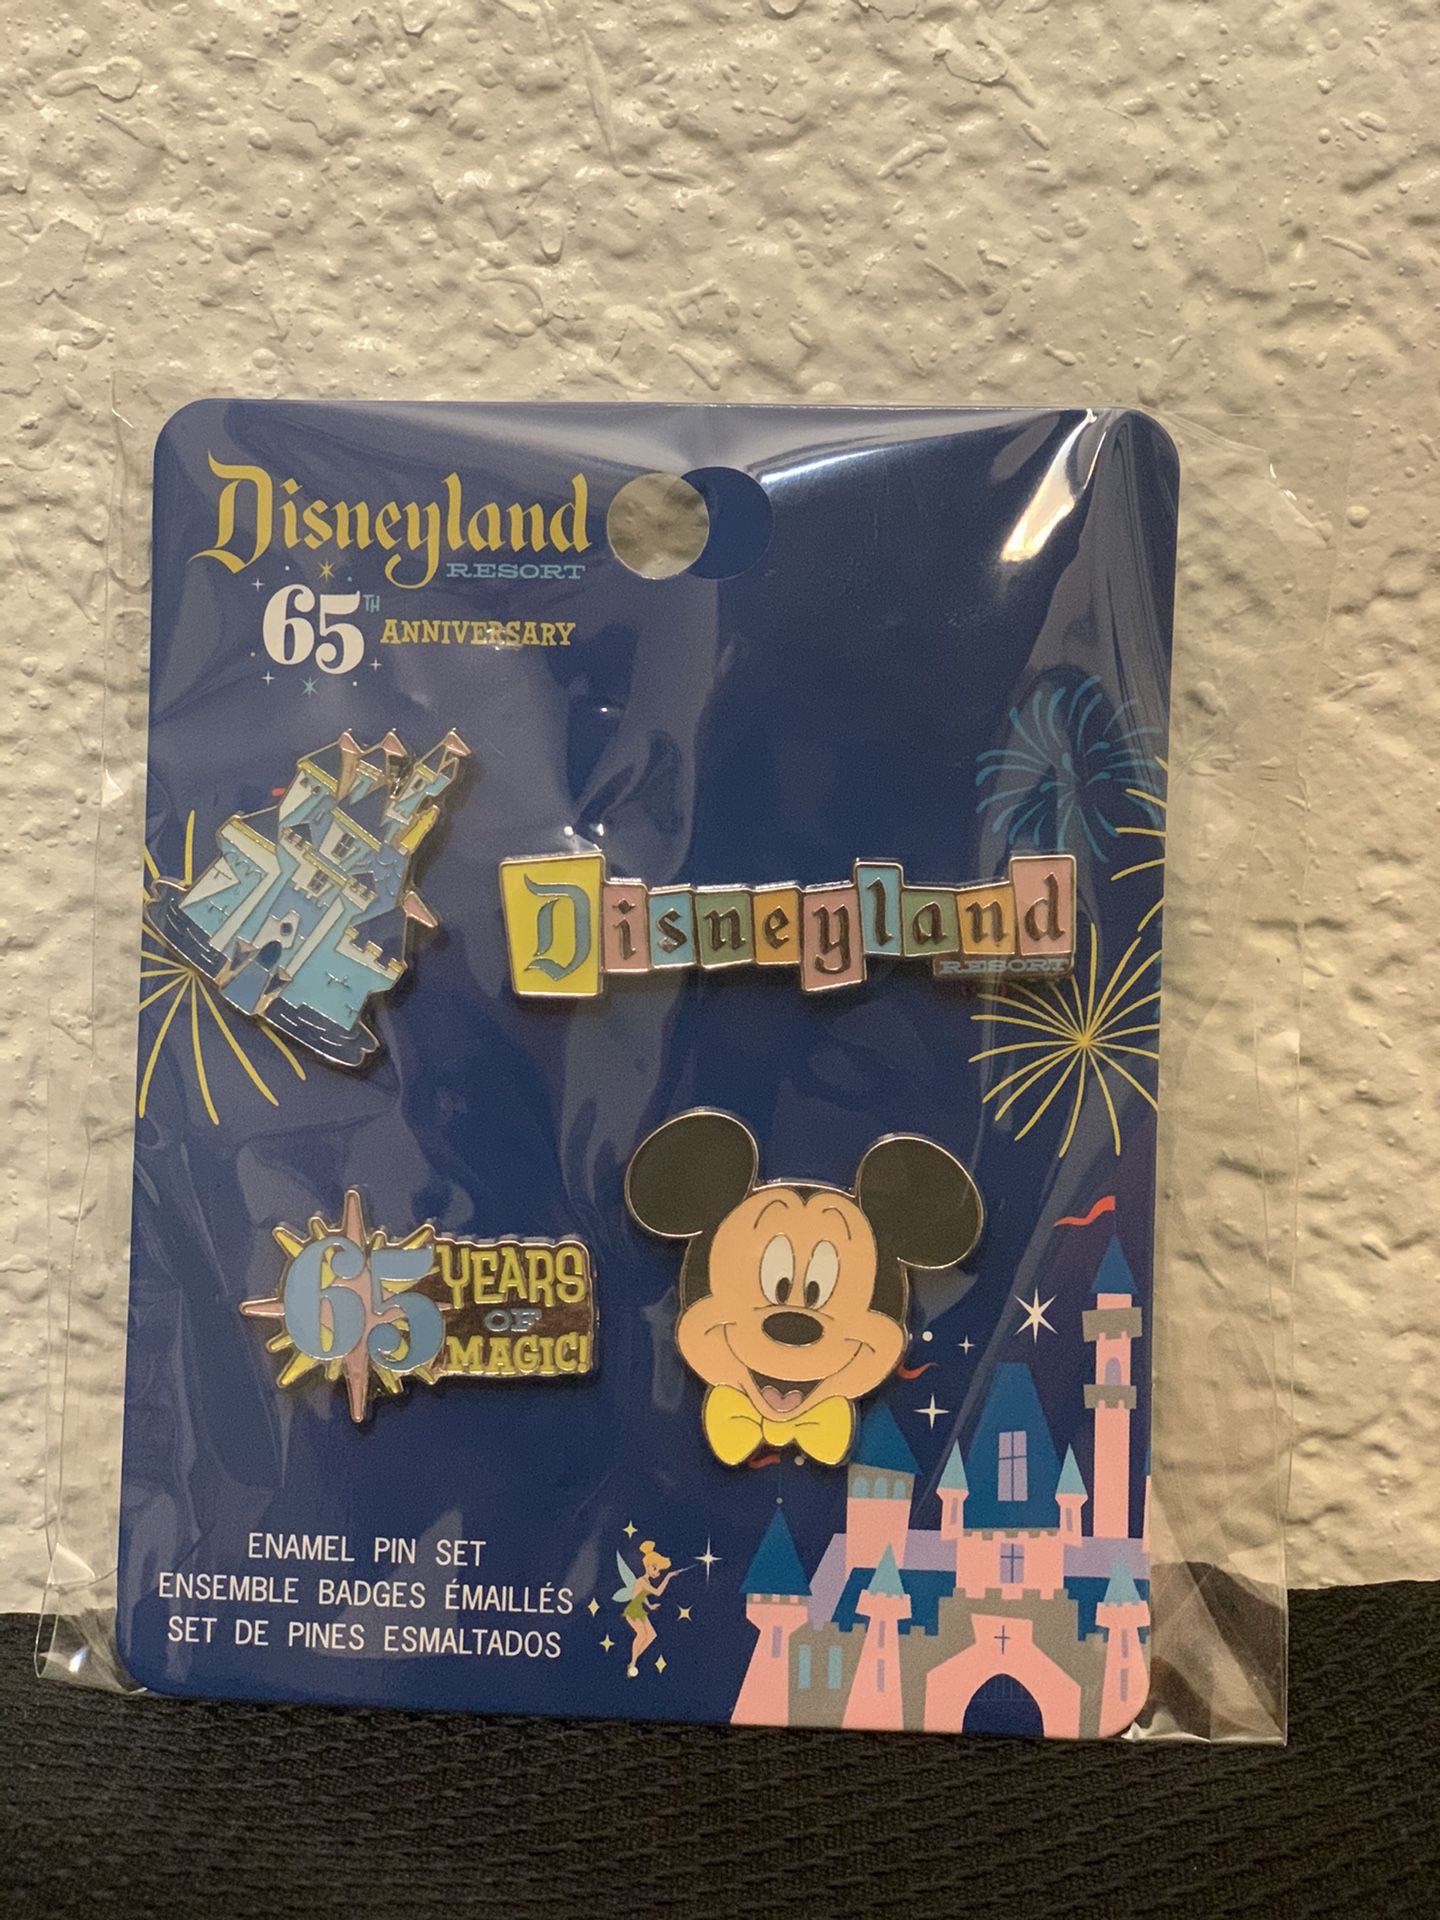 Disneyland Resort 65th Anniversary Enamel Pin Set Funko Pop Pins Exclusive